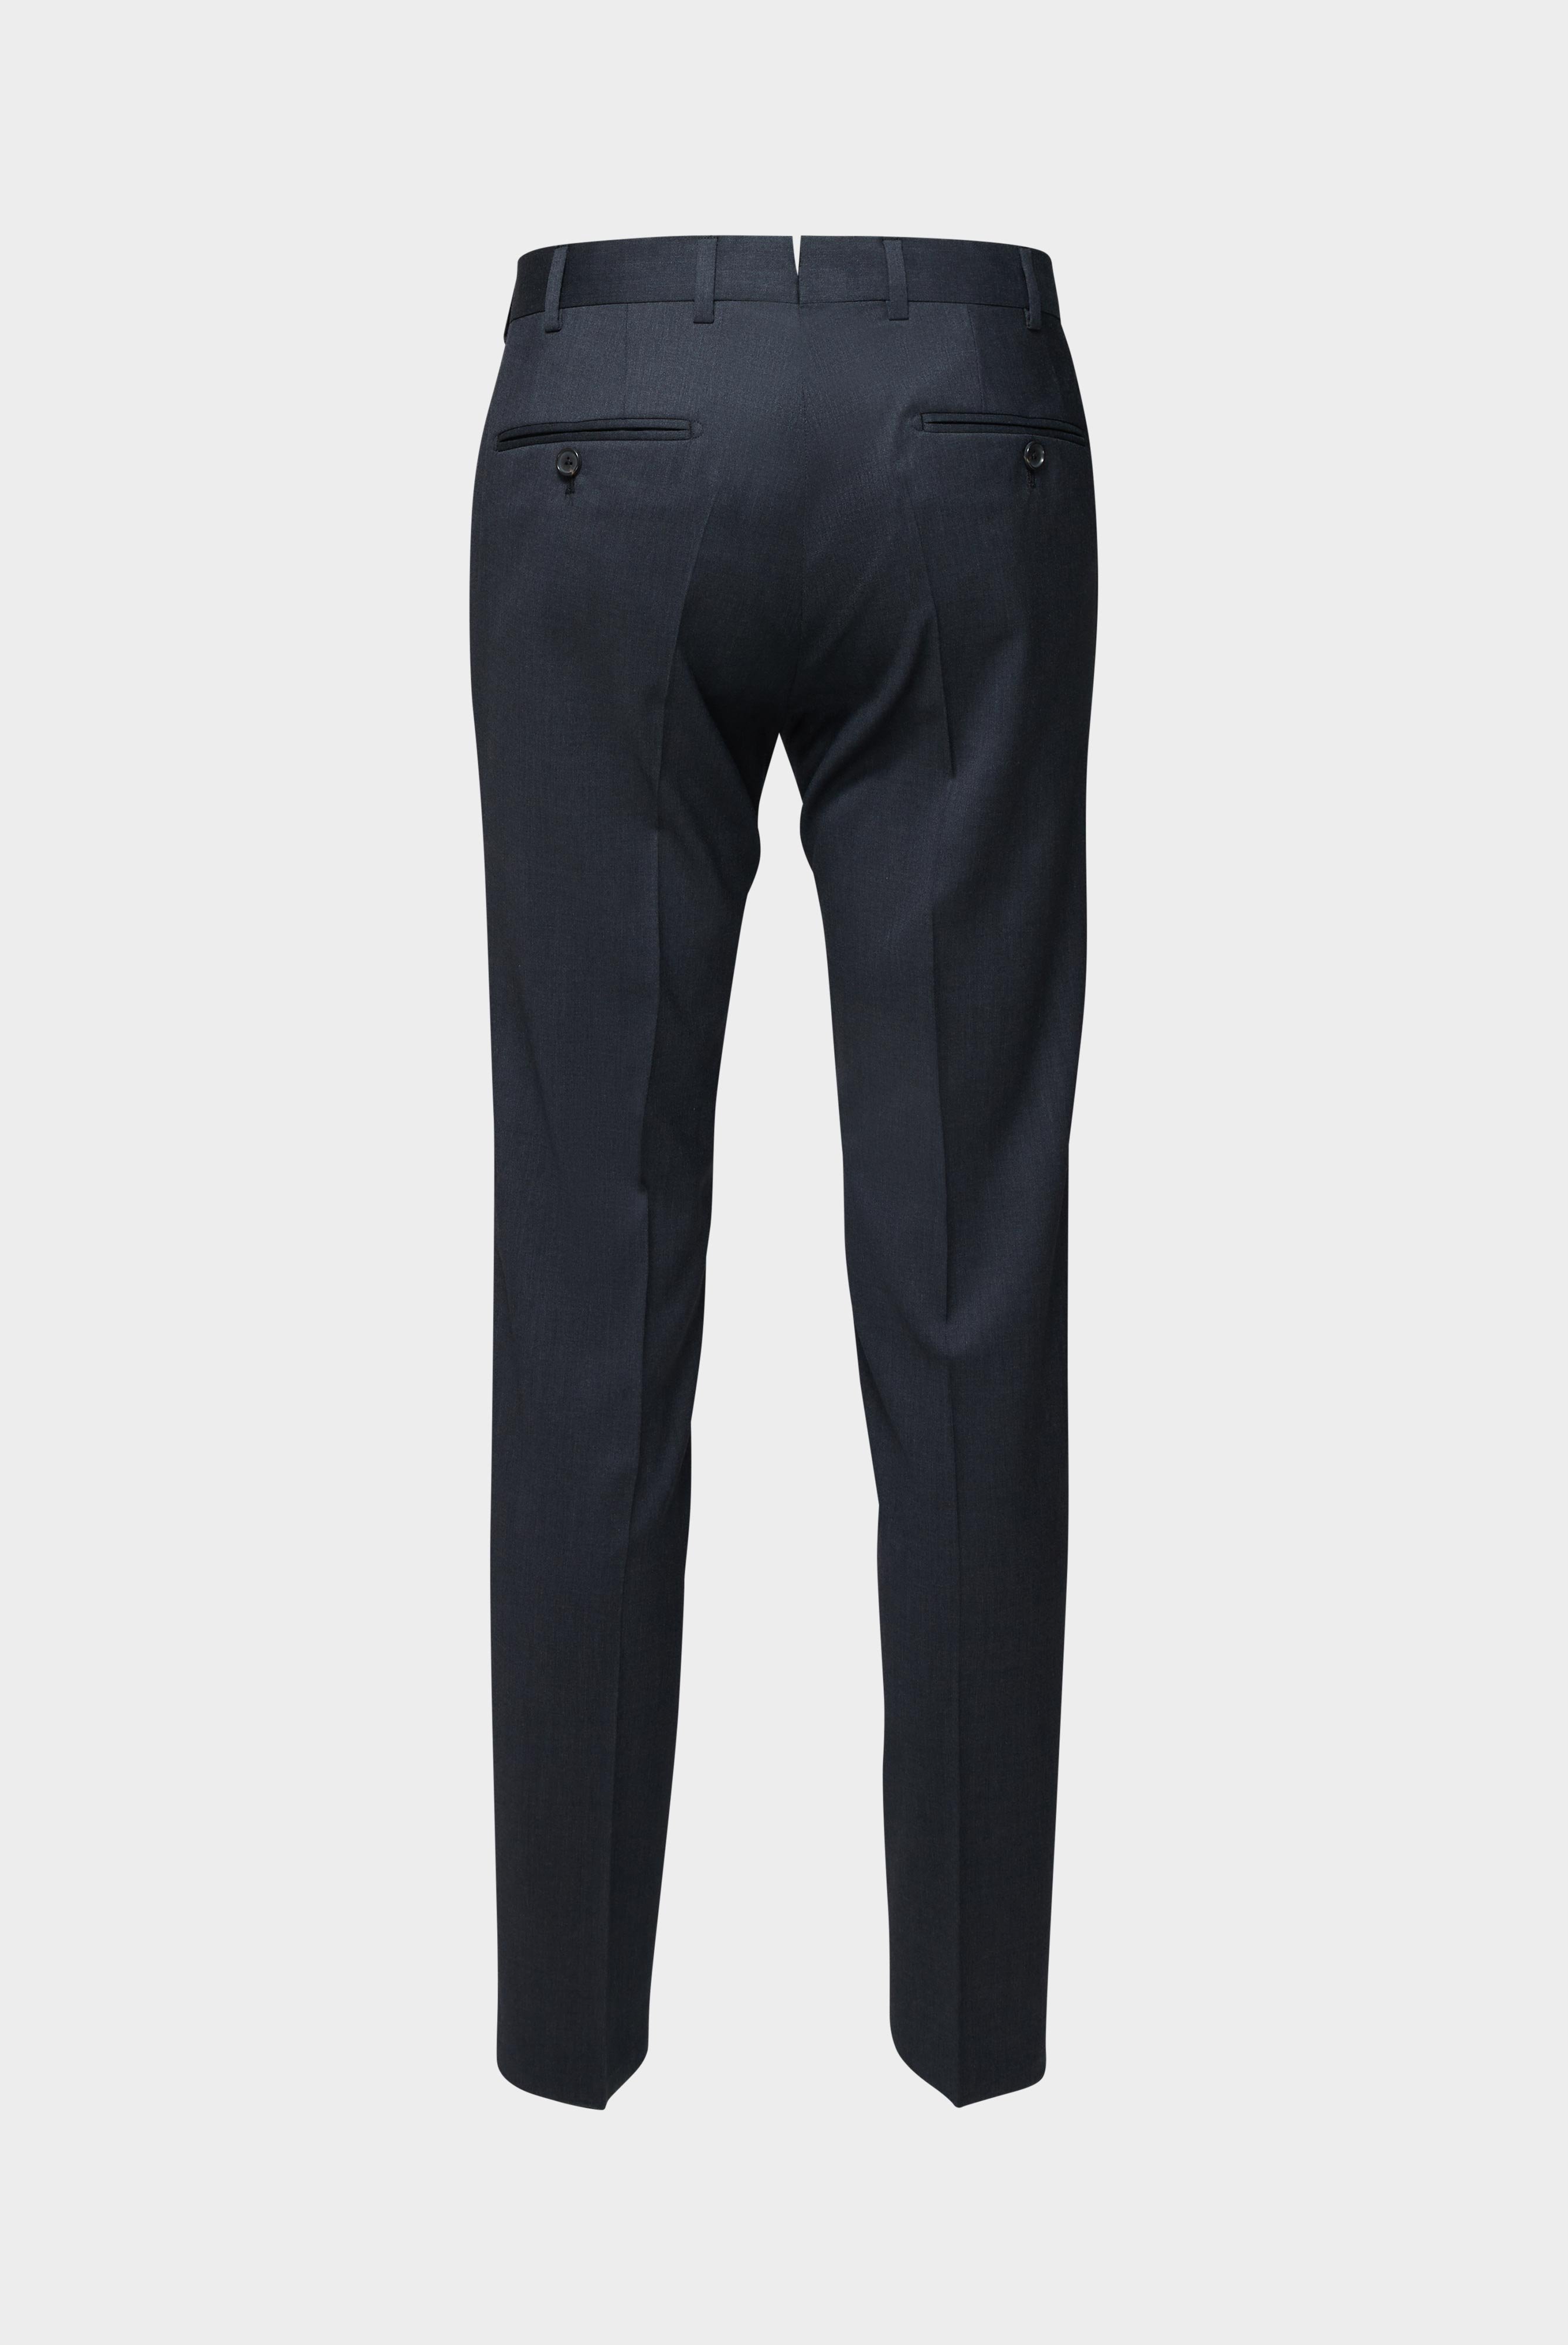 Jeans & Hosen+Hose aus Wolle Slim Fit+20.7880.16.H01010.090.23